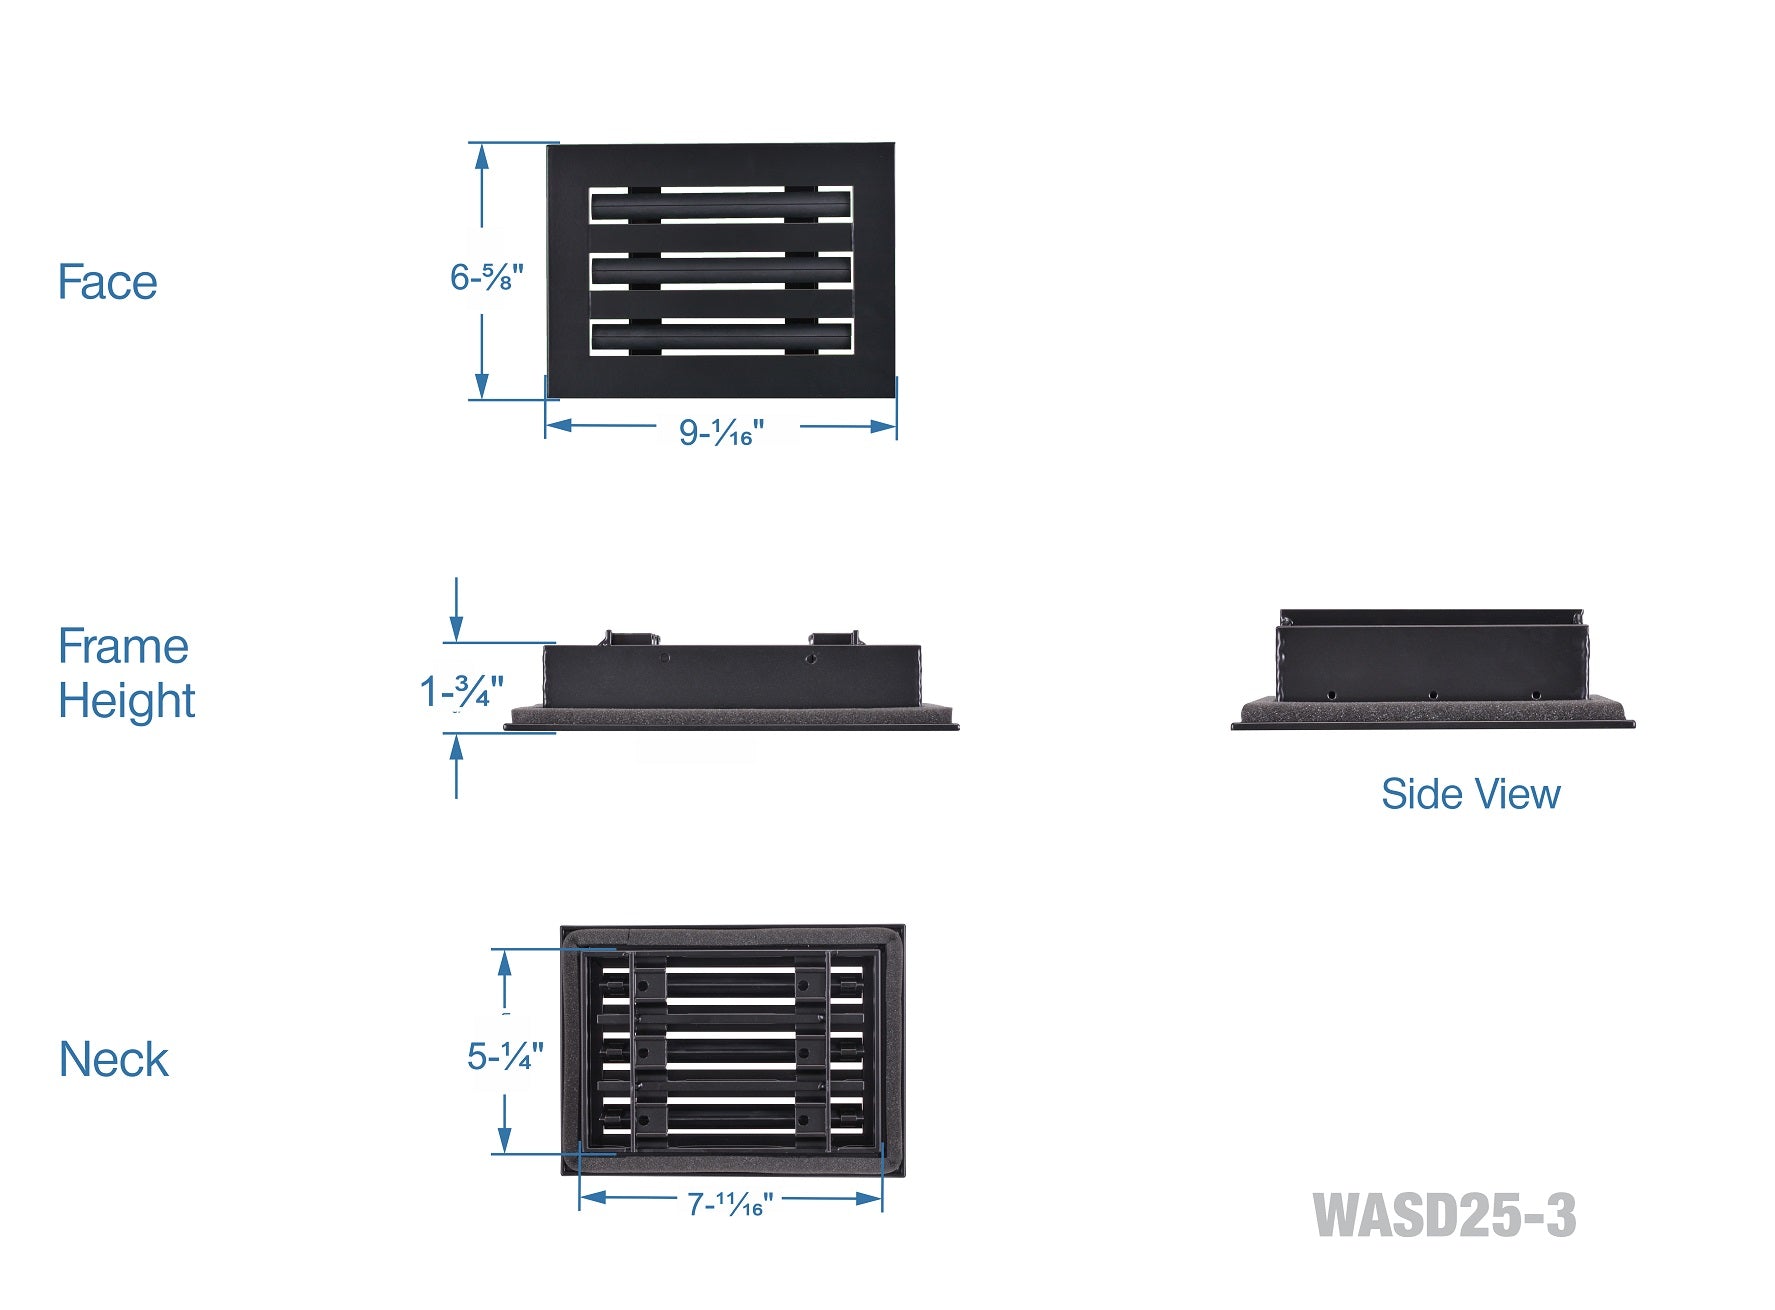 8x6" Linear Slot Diffuser HVAC Air Vent Cover (black)